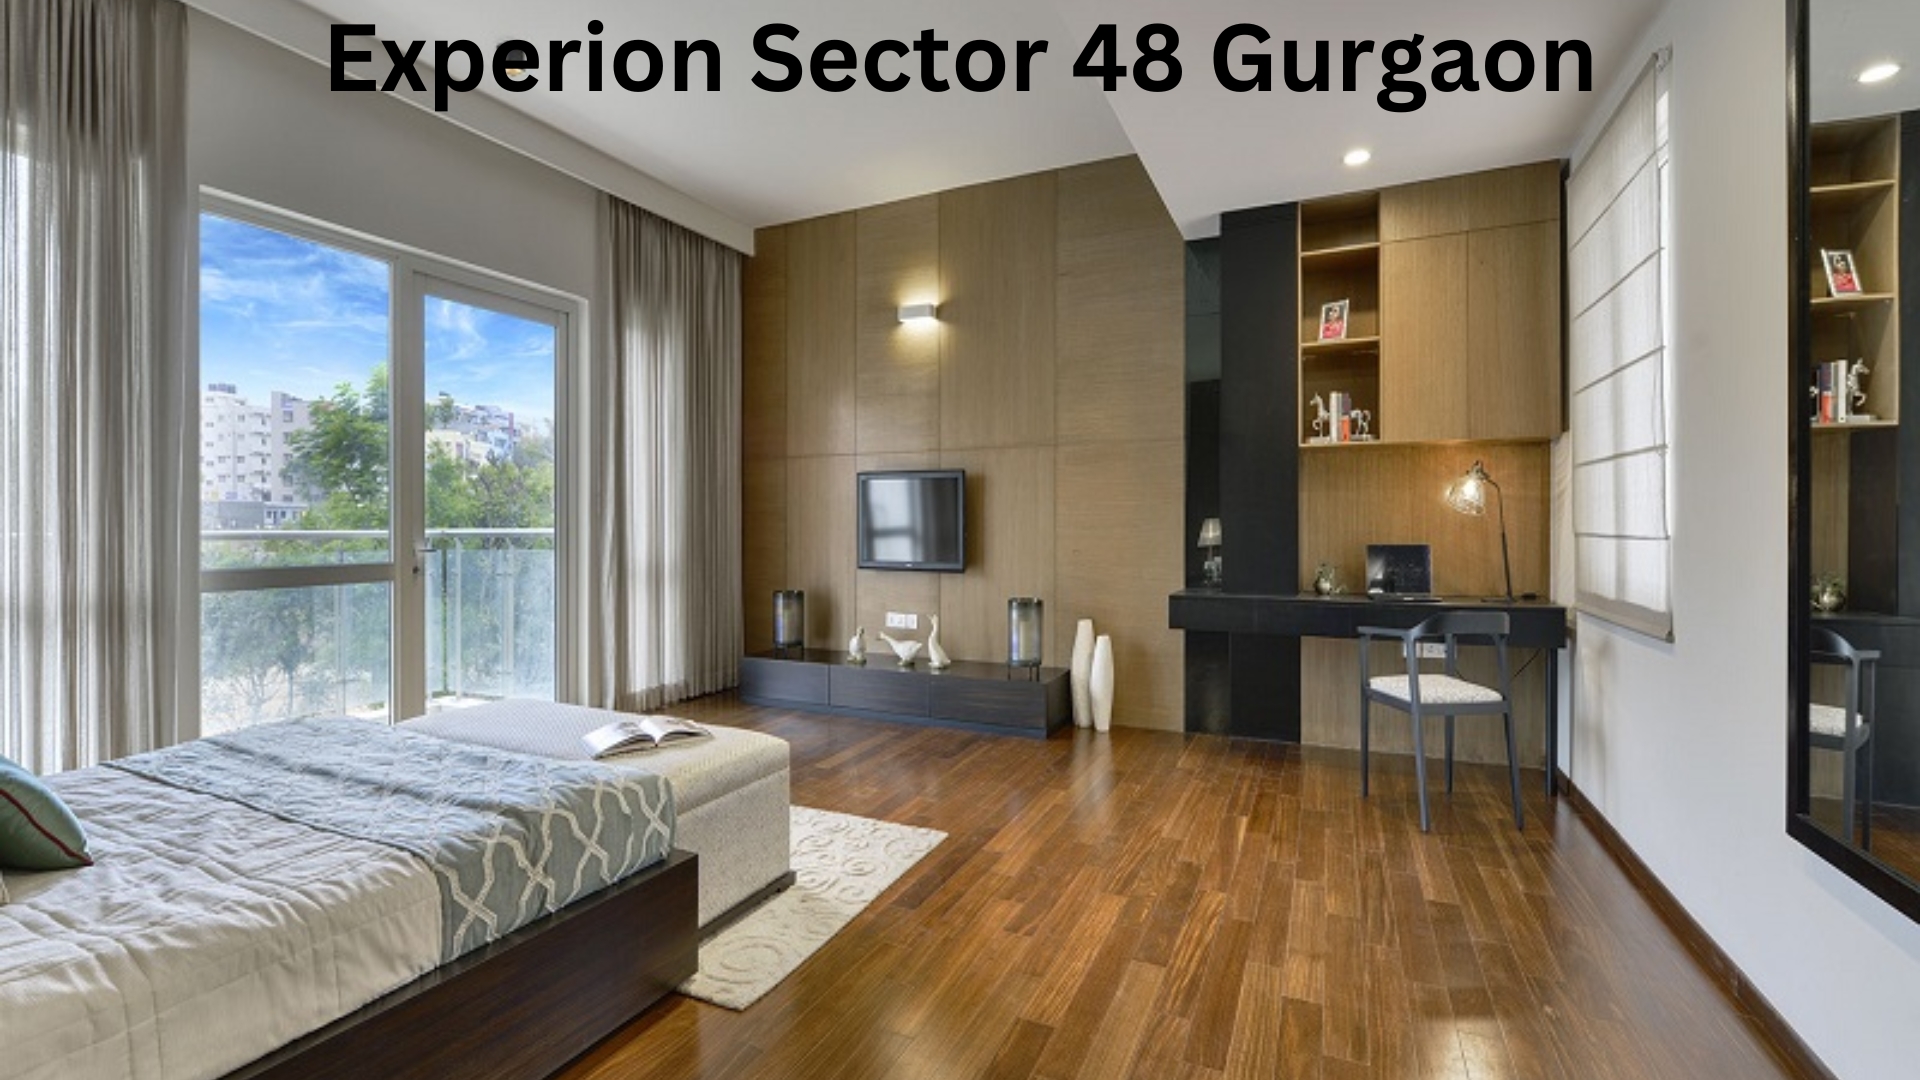 Godrej Sector 49 Gurgaon 